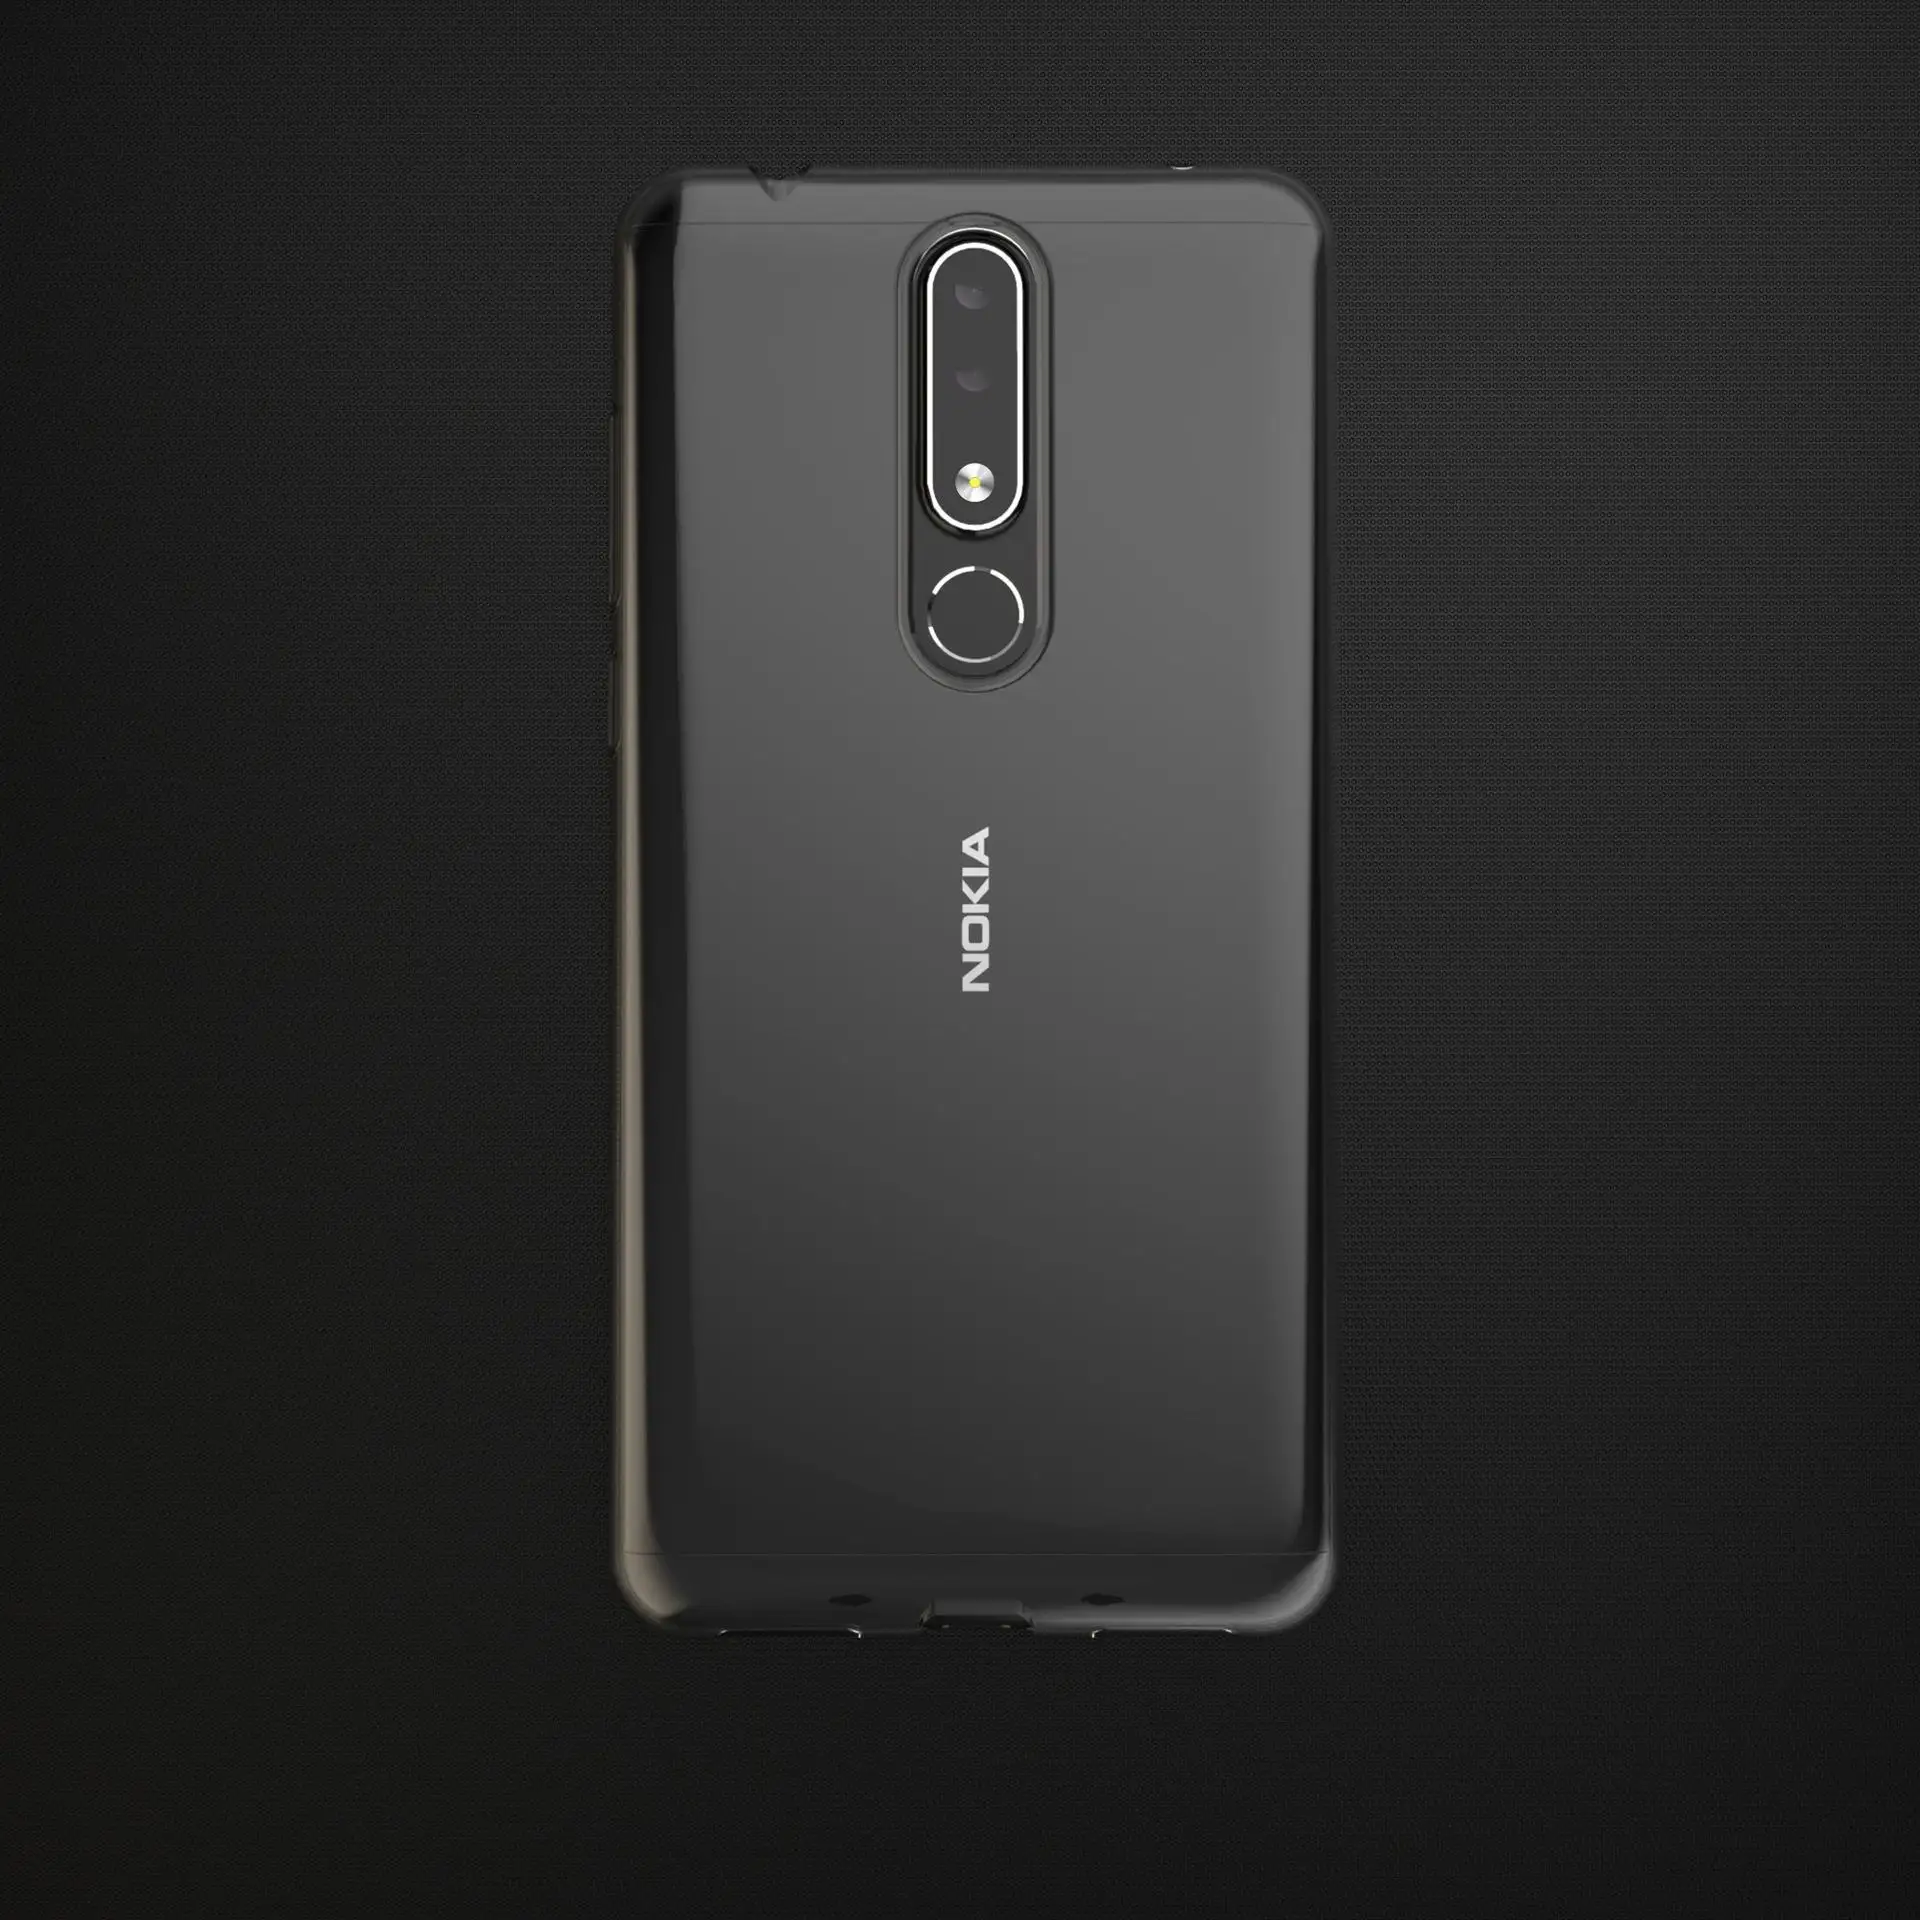 Şeffaf yumuşak 0.8MM kristal cep telefonu Tpu kılıf Nokia 3.1 artı kapak